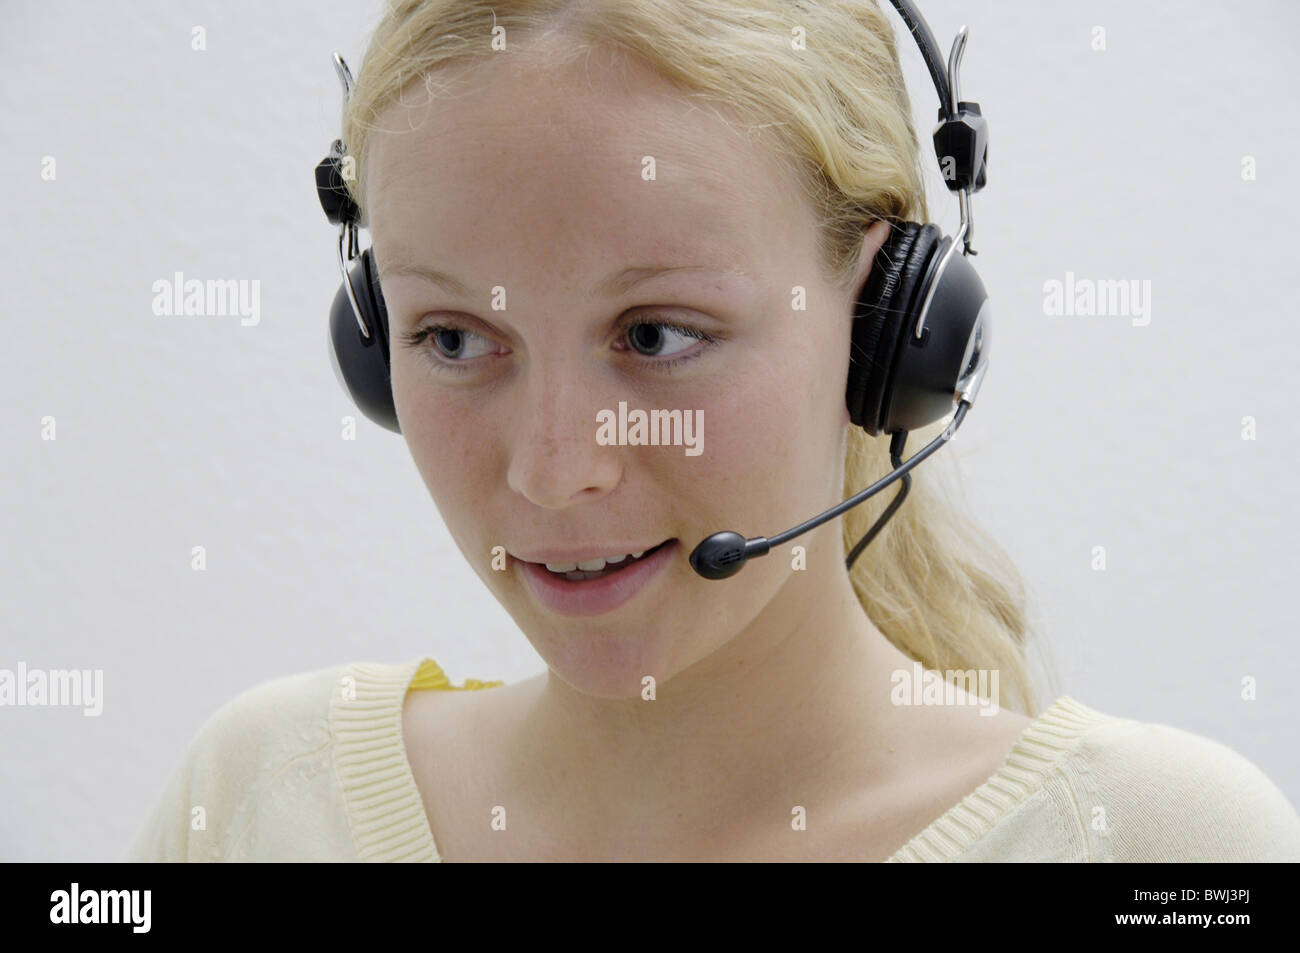 Callcenter Call Center junge Frau junge Porträt Blond aufrufen Kunde Kopfhörer Ohrhörer Ohrstöpsel se. Stockfoto